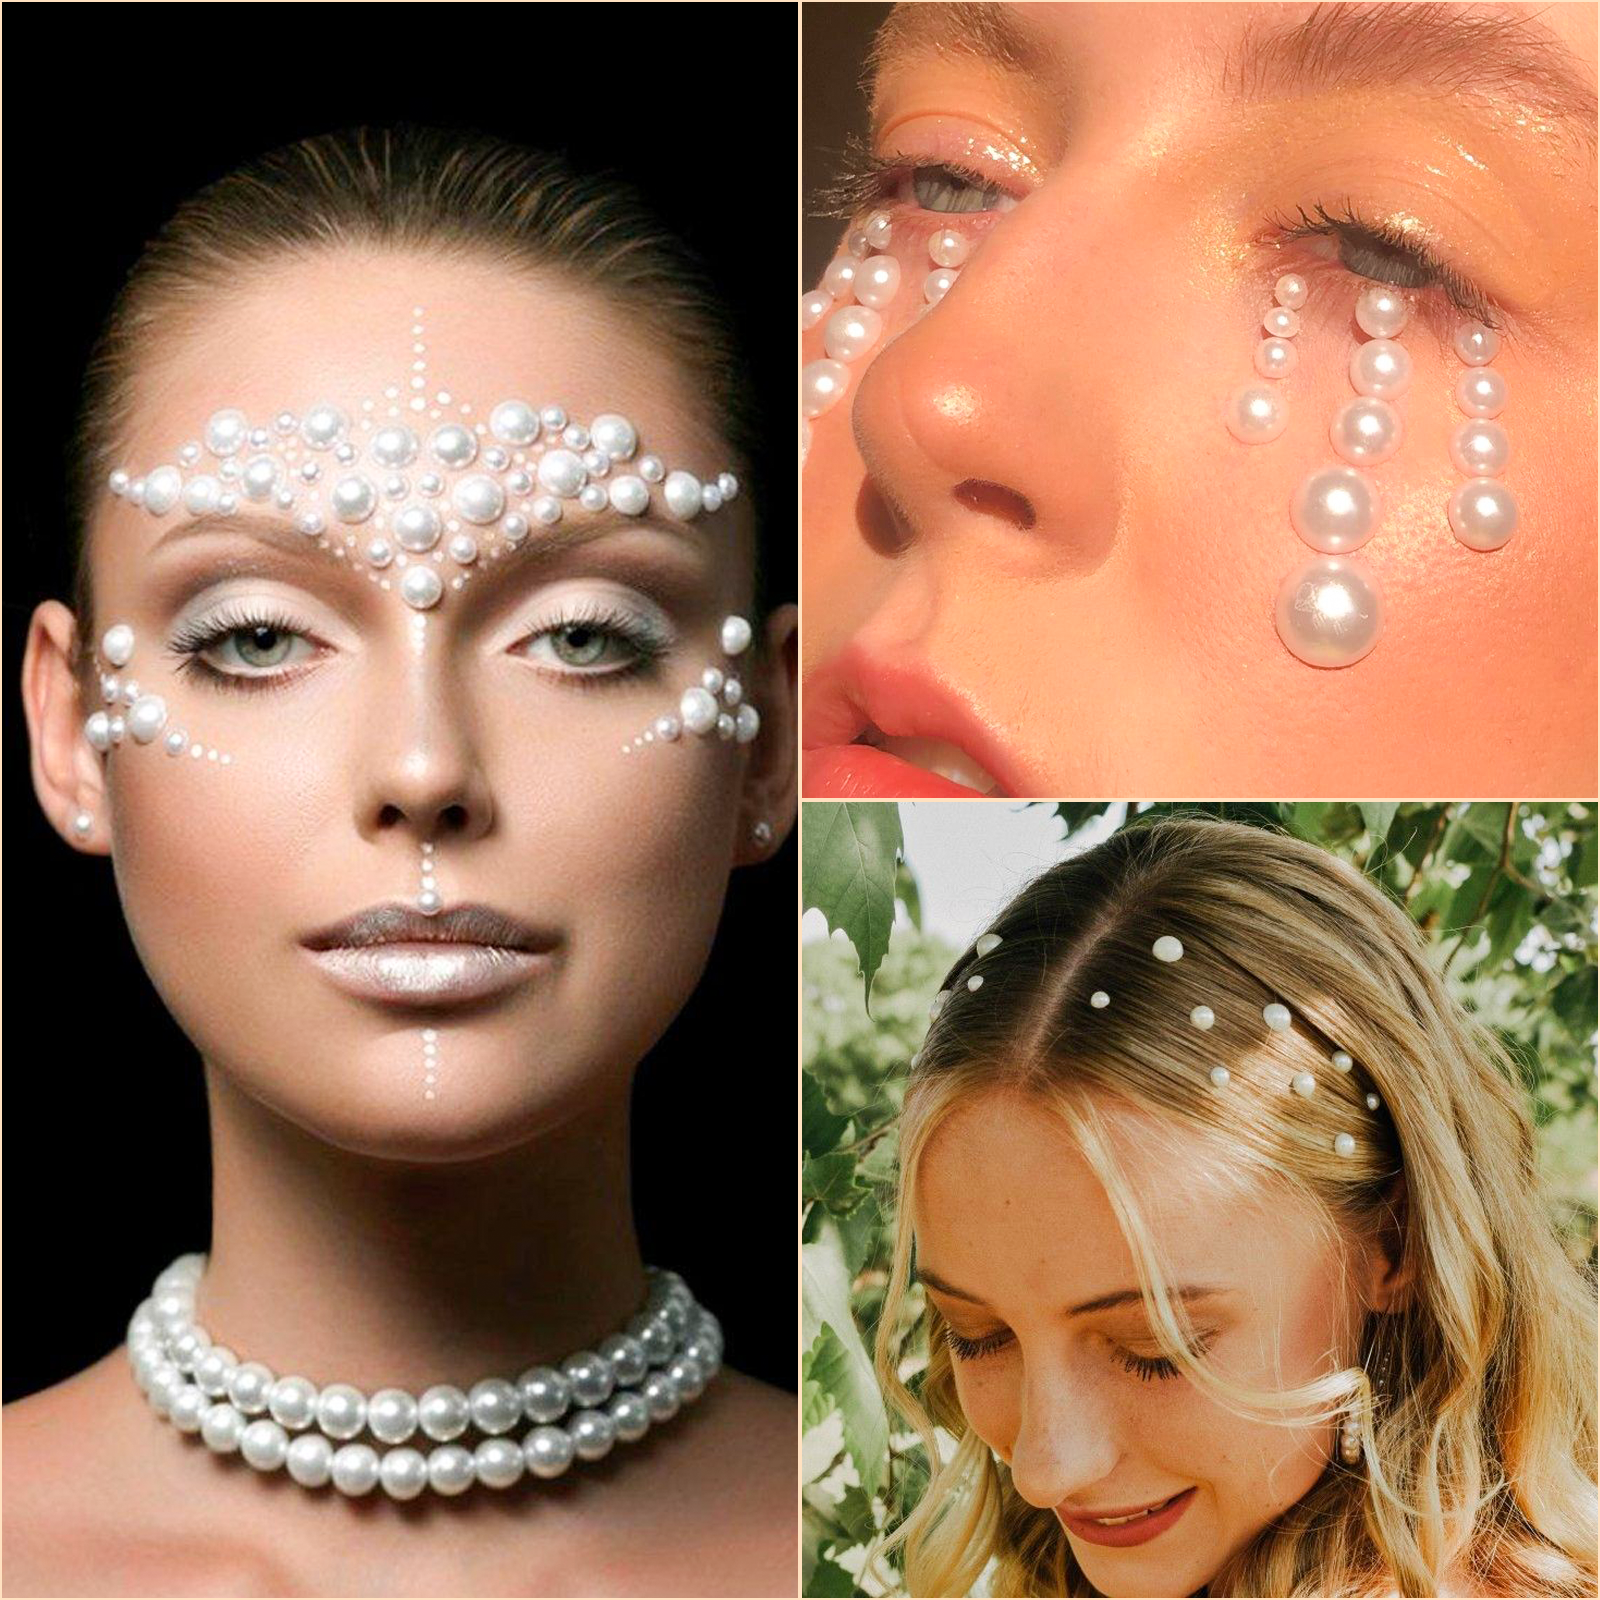 6 Sheets Face Gems Stick on Eye Self-Adhesive, Face Diamonds Stick